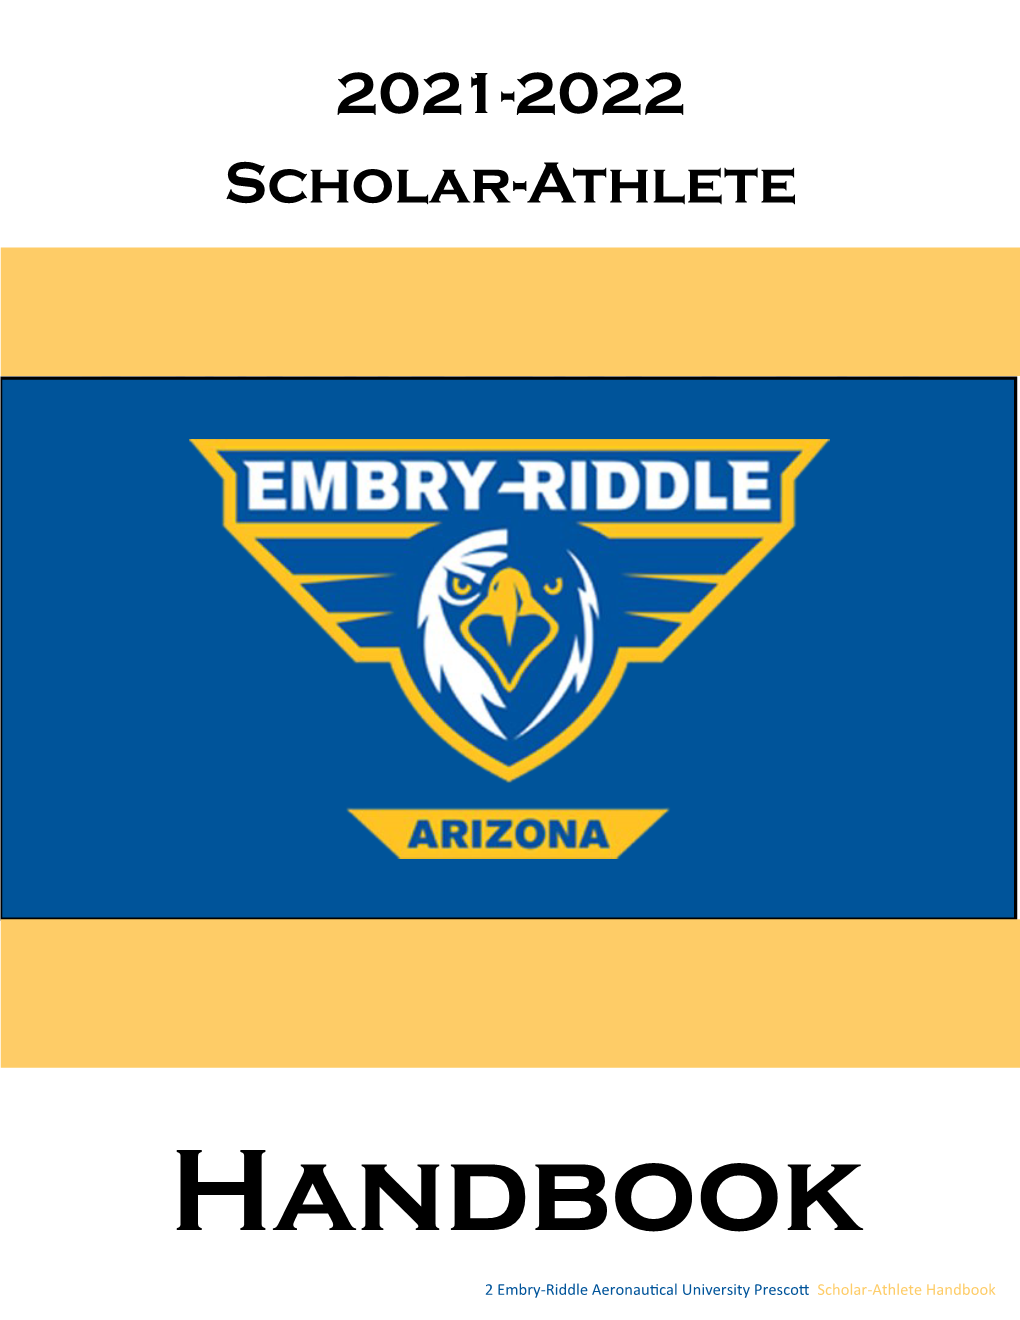 2021-2022 Scholar-Athlete